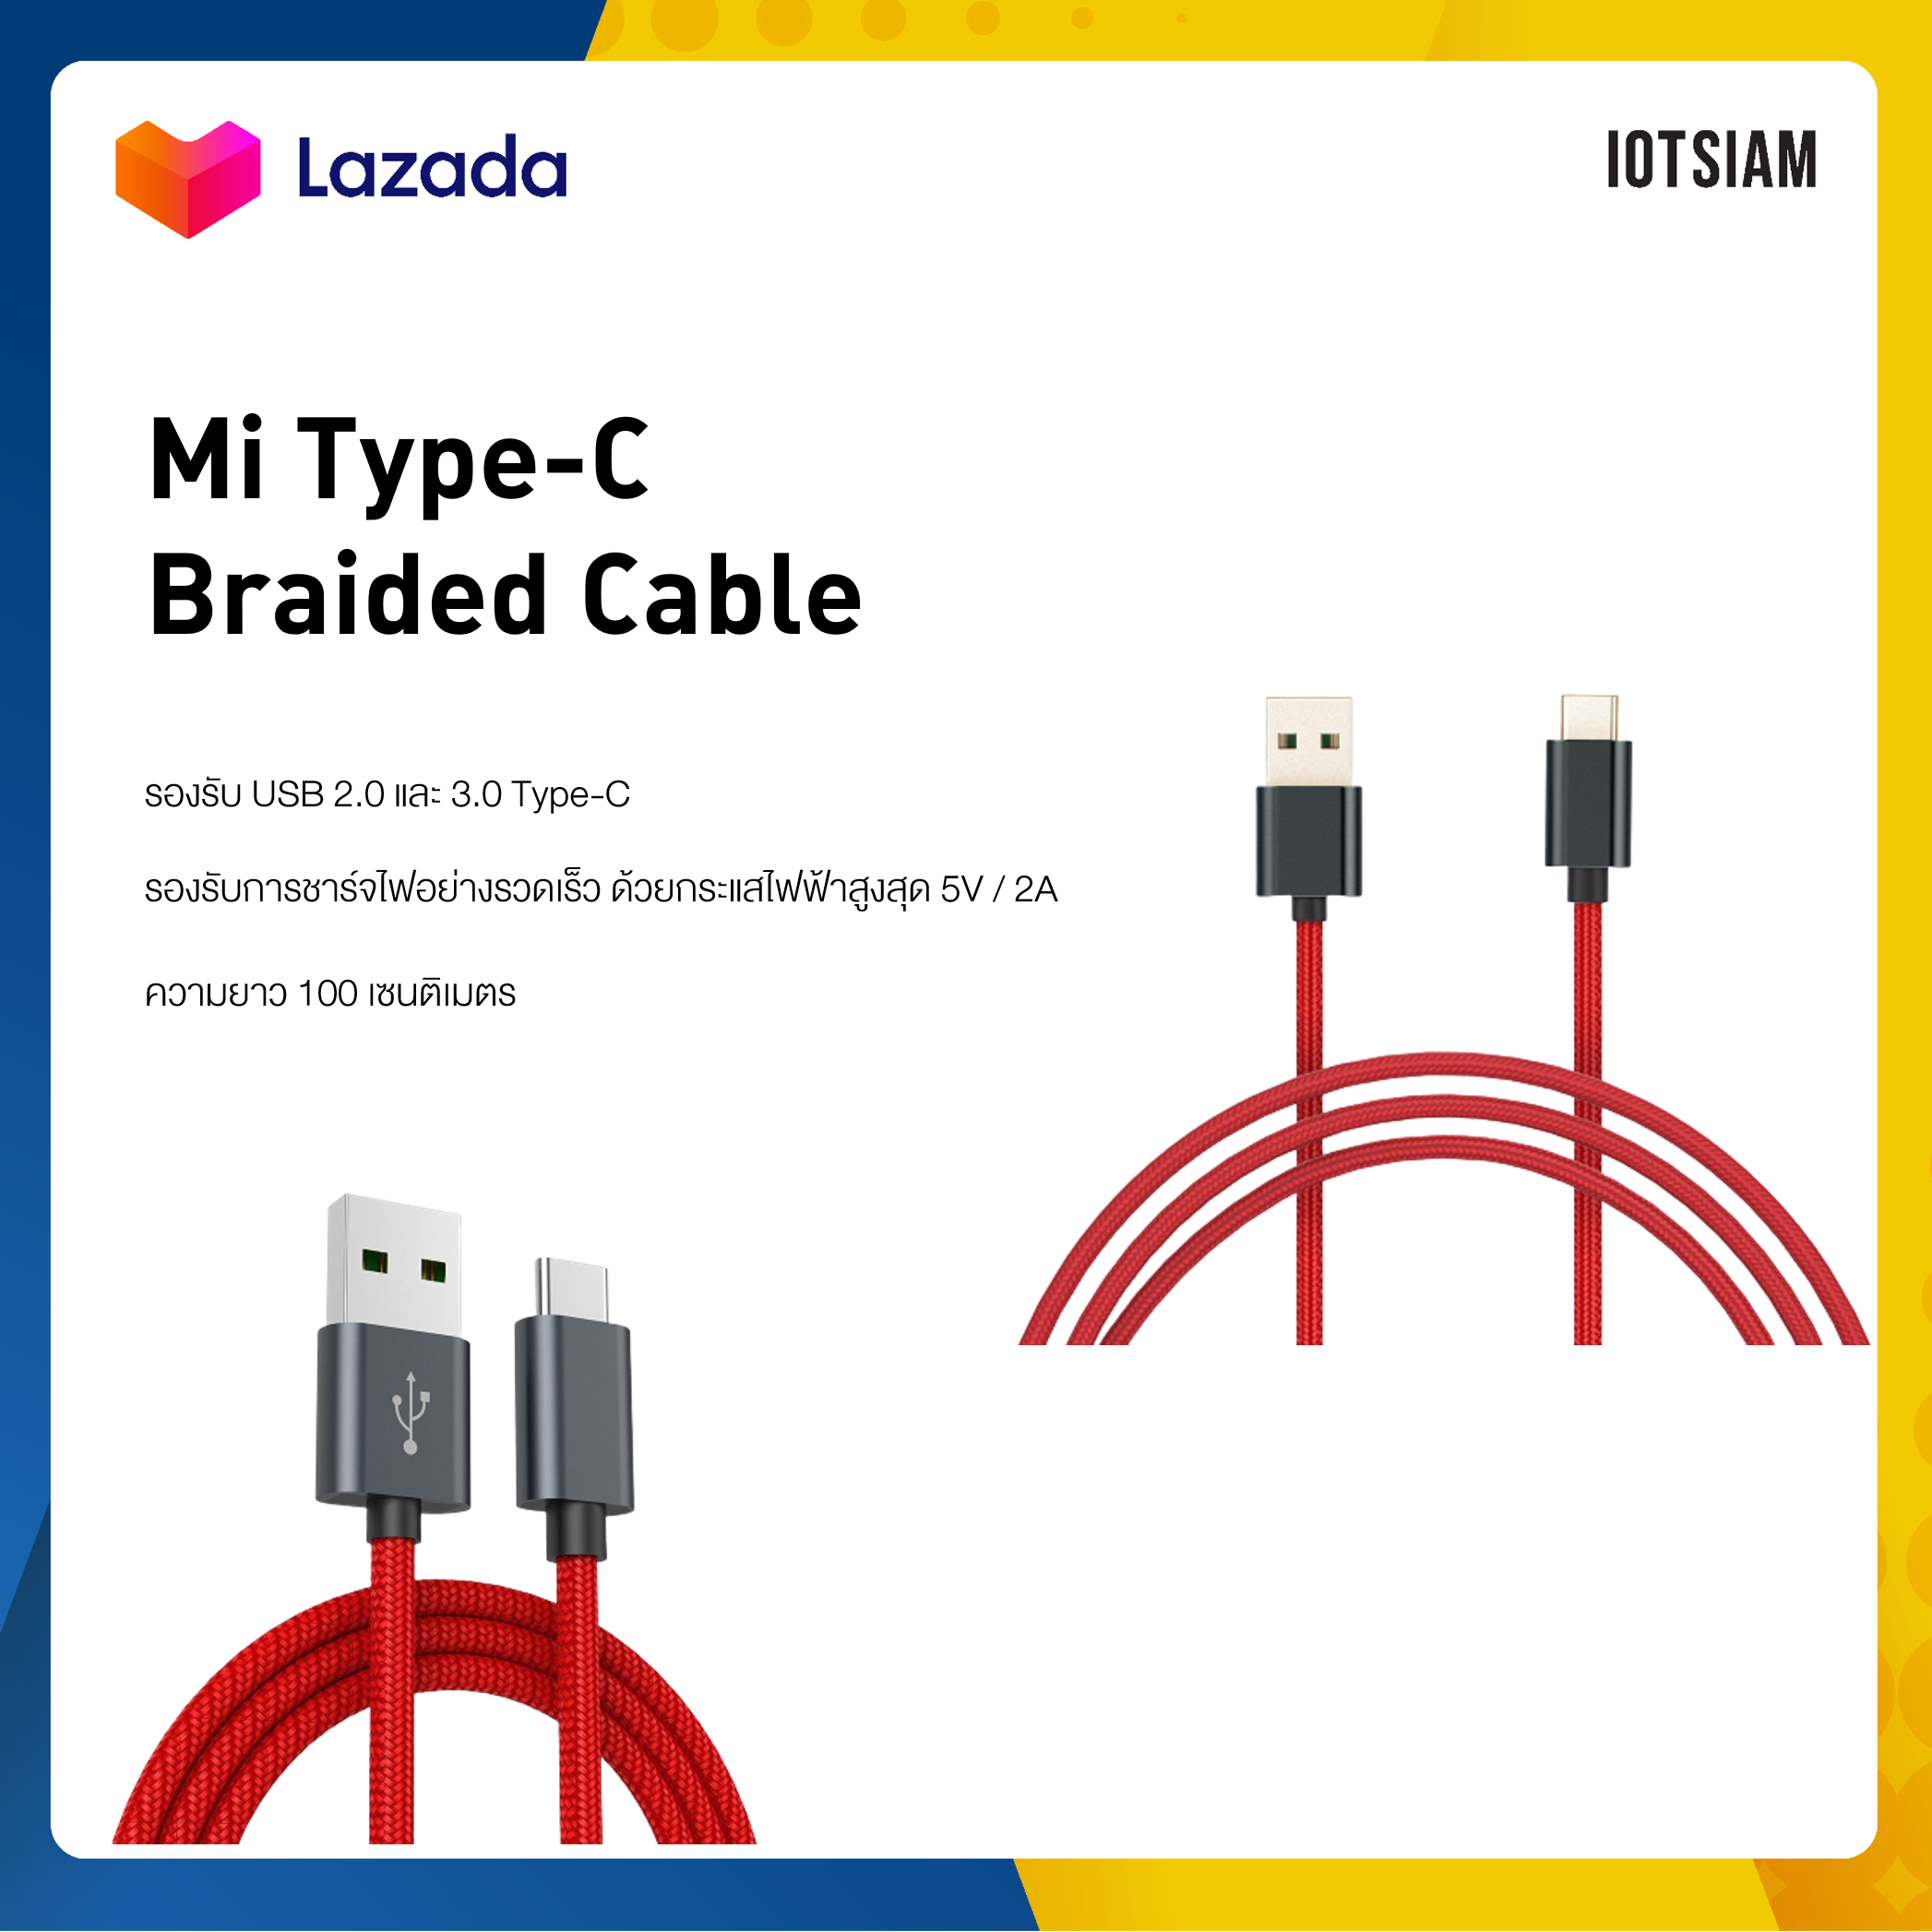 Mi Type-C Braided Cable